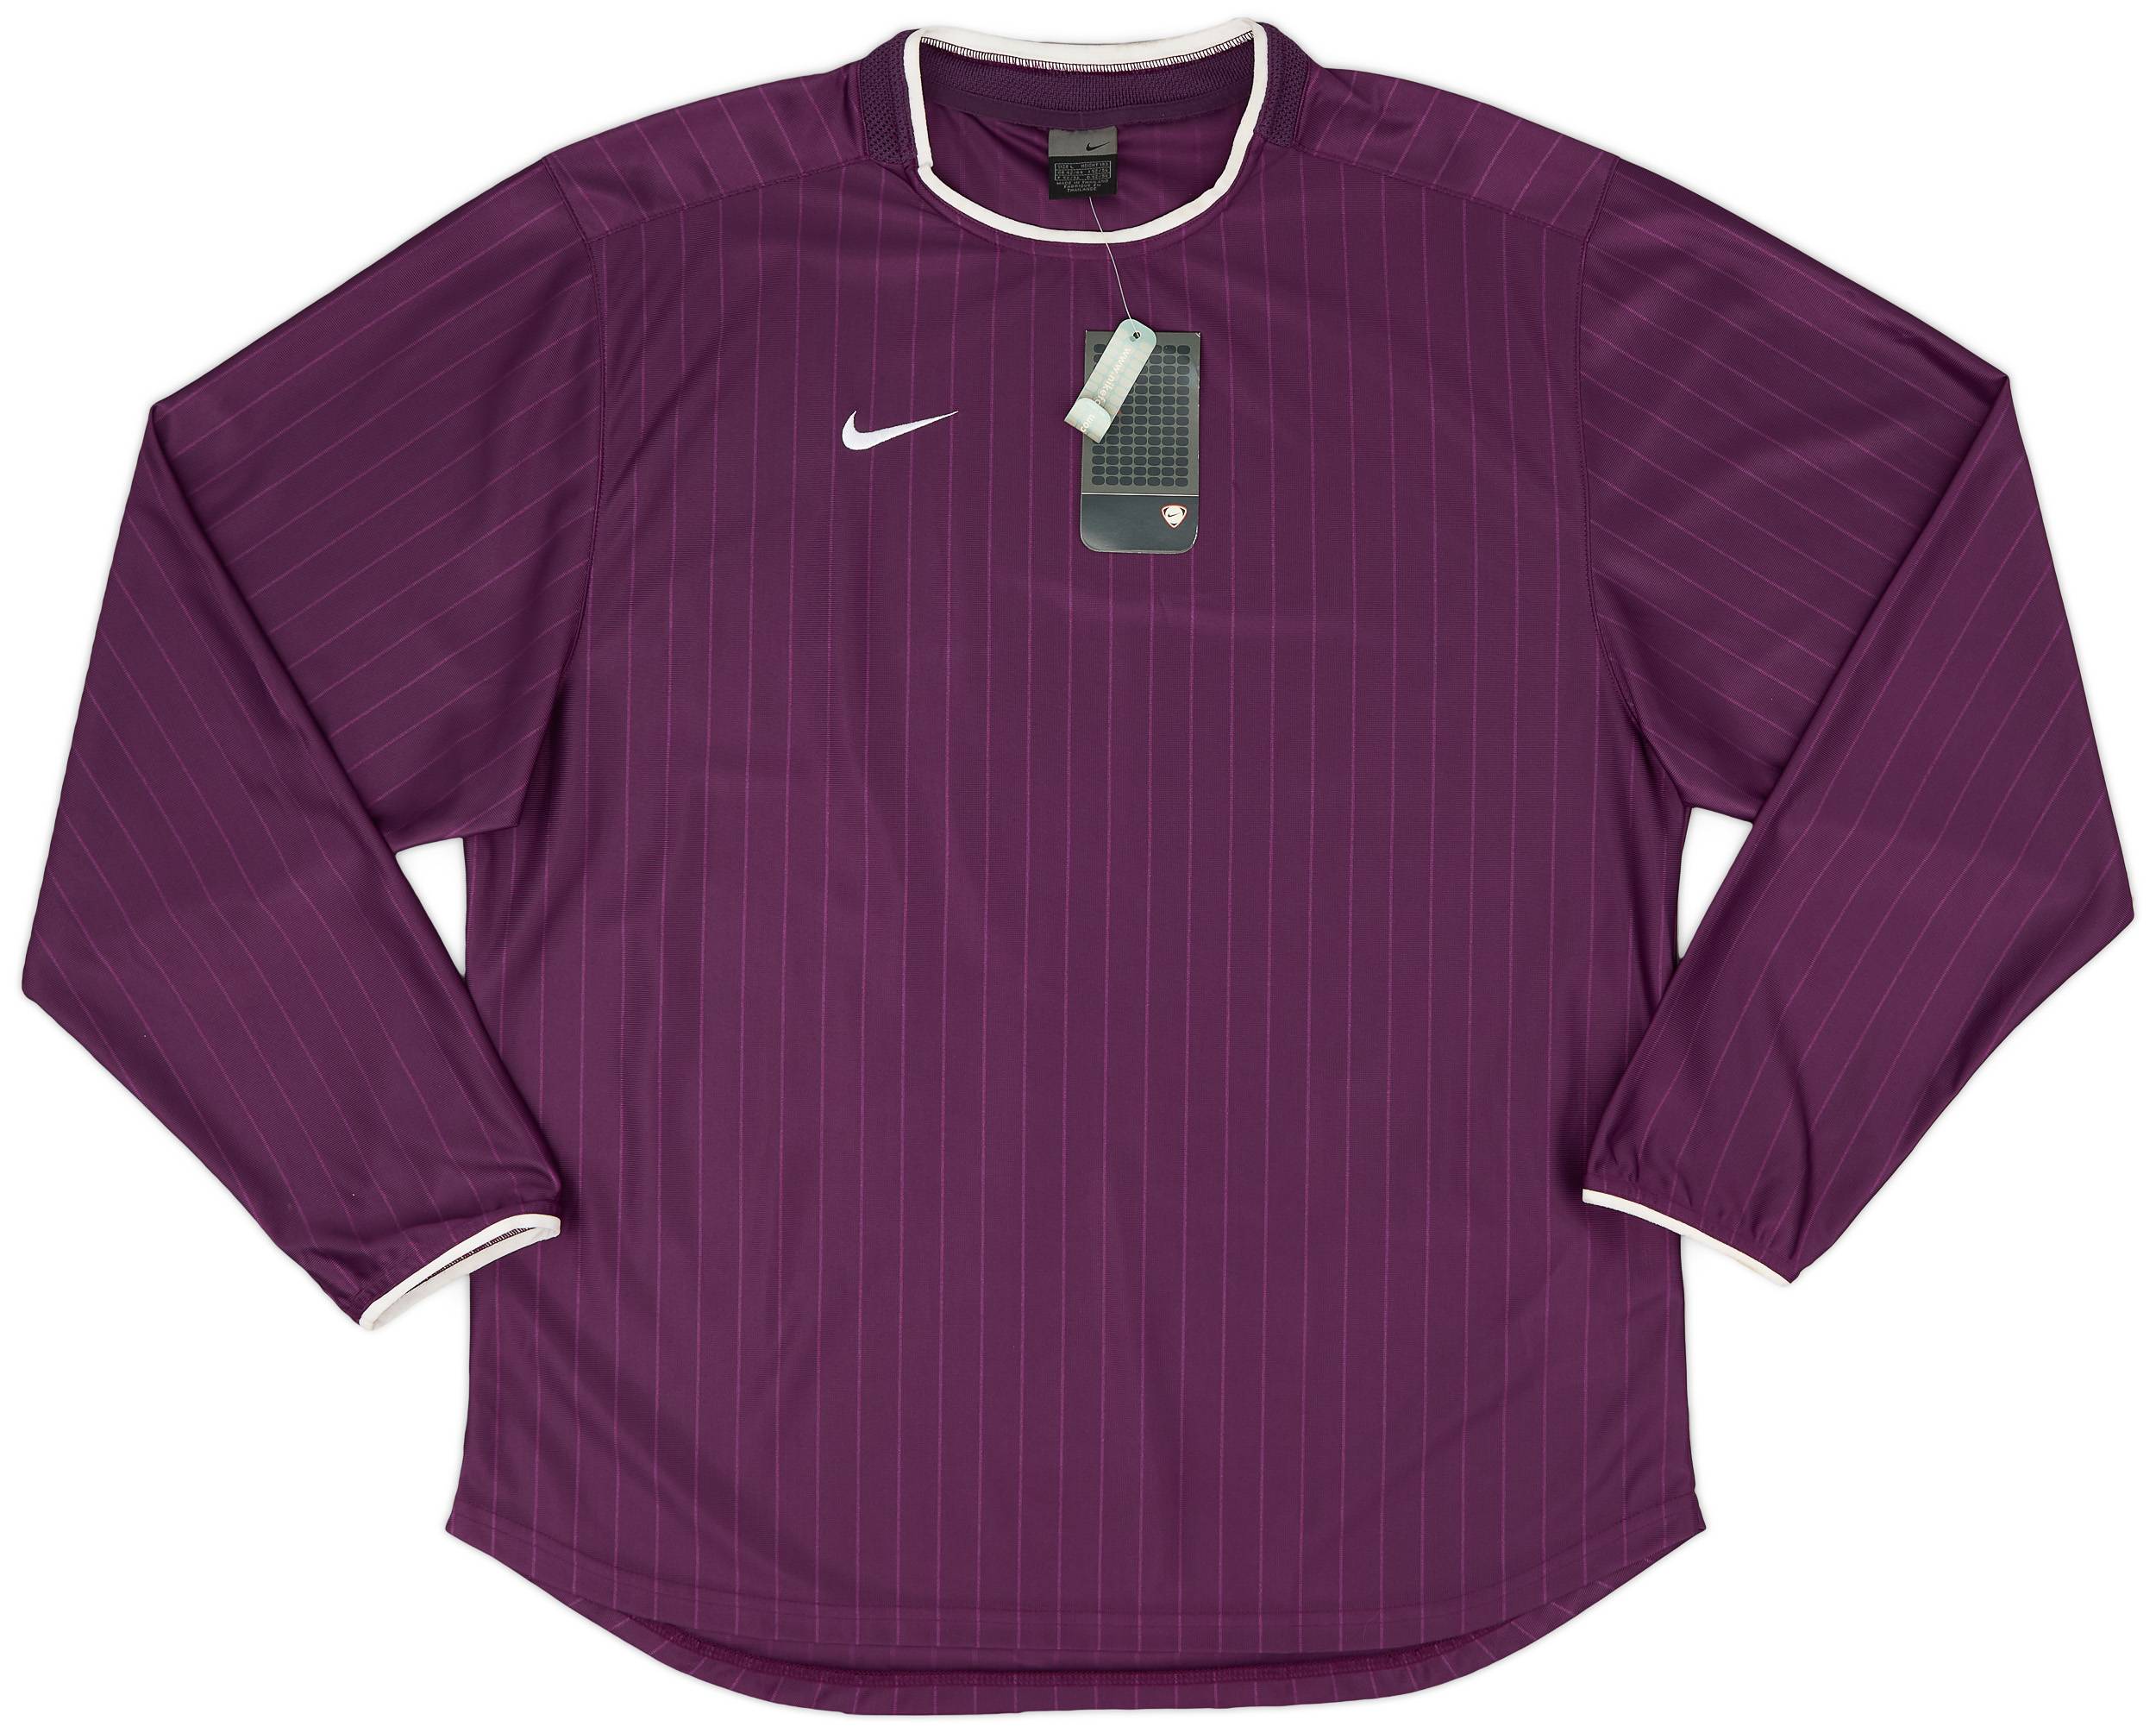 2002-03 Nike Template L/S Shirt - 9/10